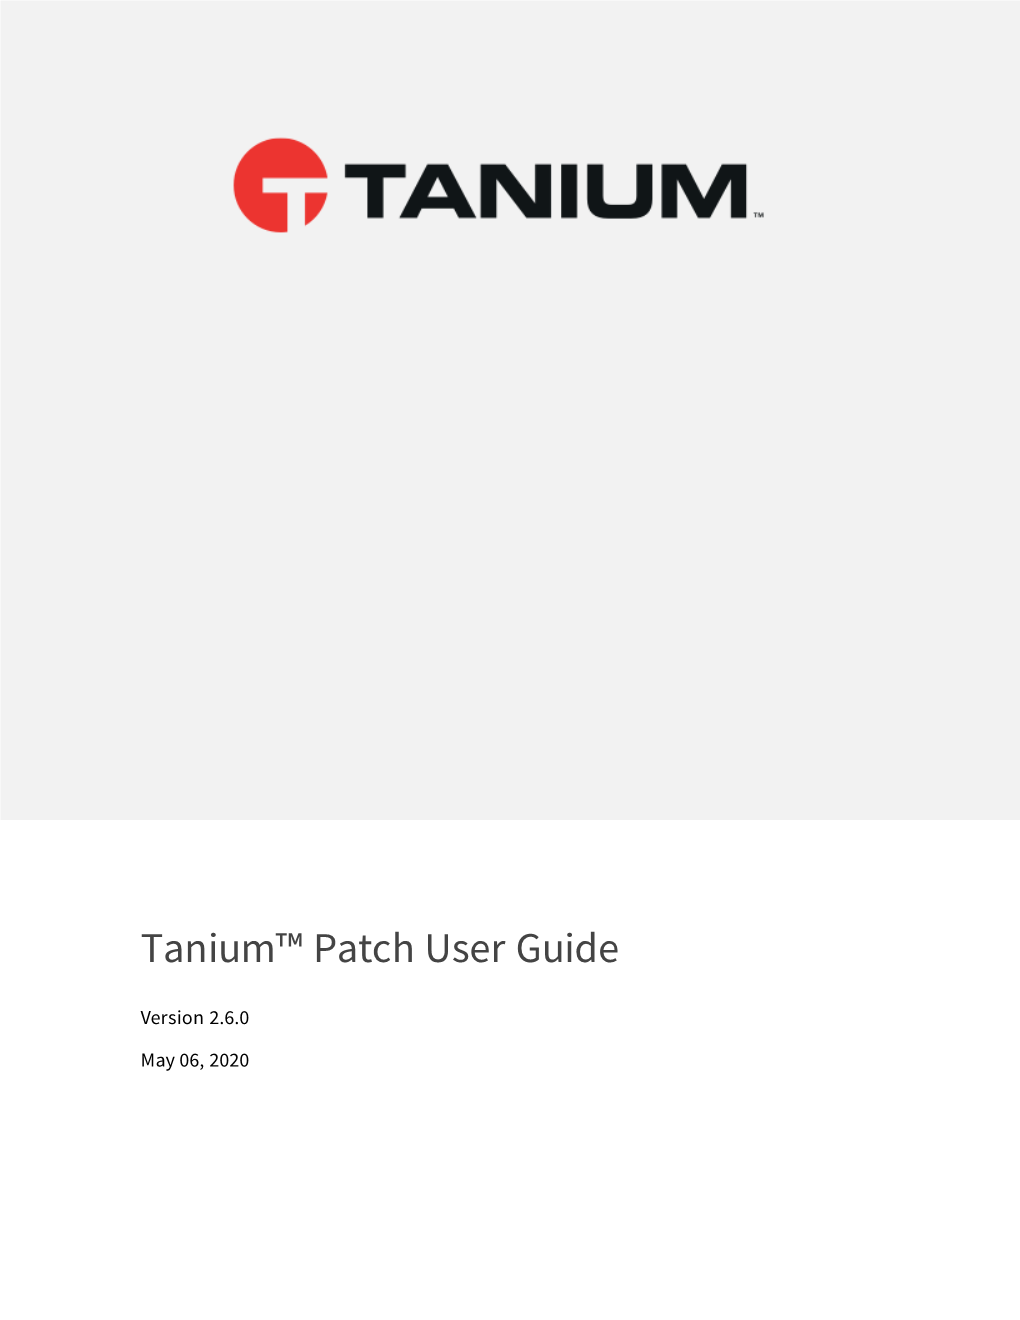 Tanium Patch User Guide